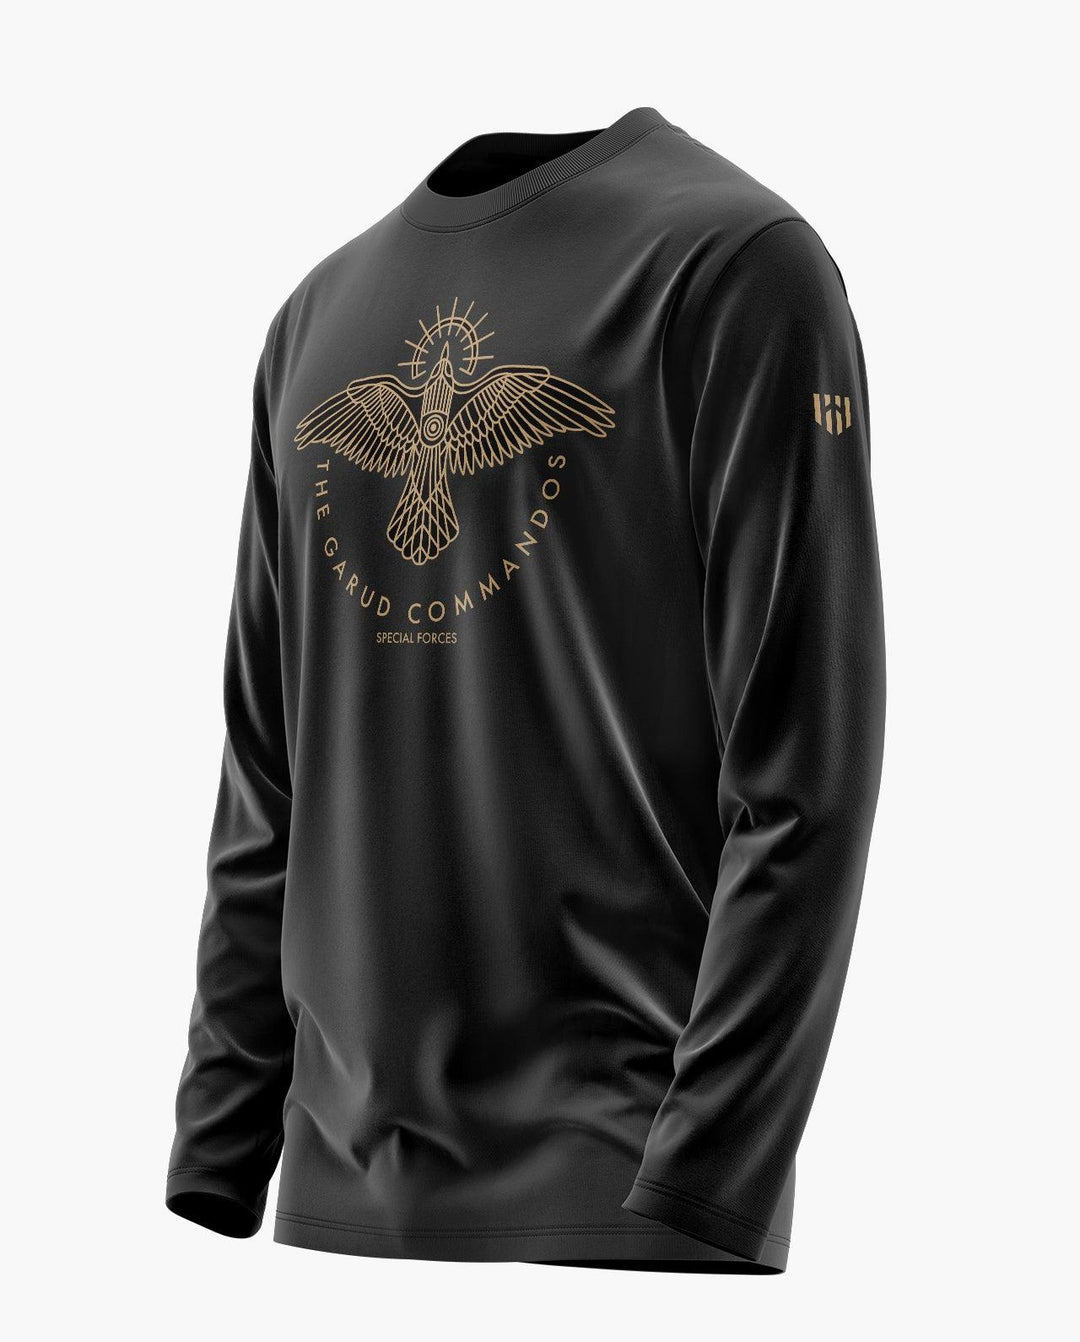 Garud Commandos SF Full Sleeve T-Shirt - Aero Armour